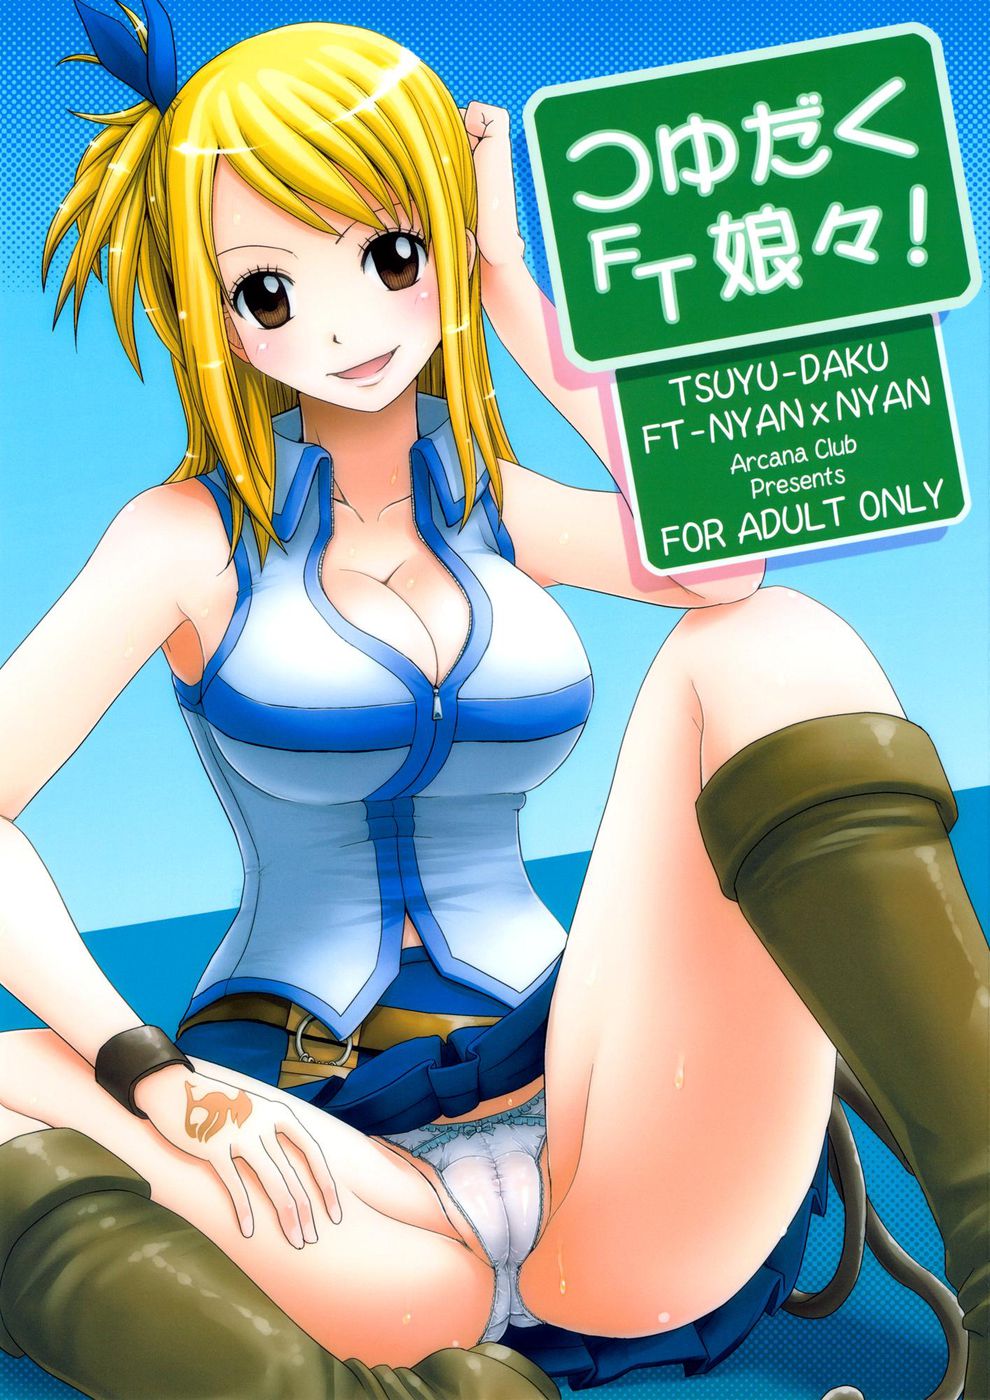 Hentai Manga Comic-Tsuyu-Daku FT-Nyan x Nyan-Read-1